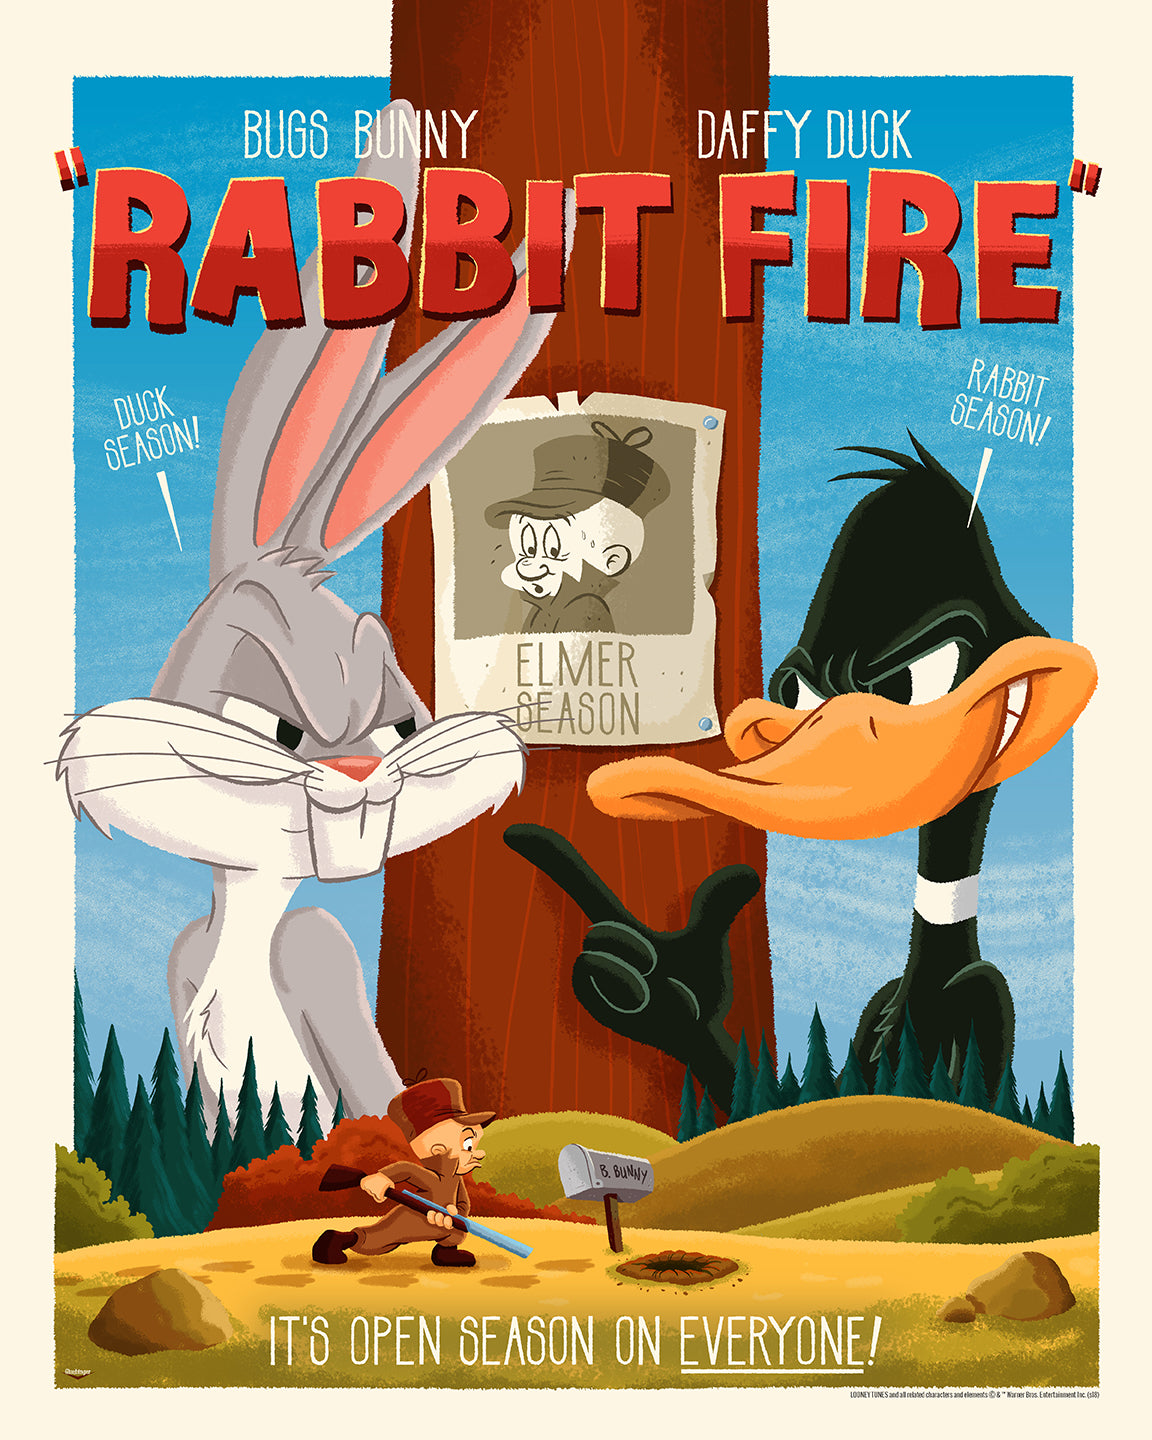 Ian Glaubinger "Rabbit Fire"